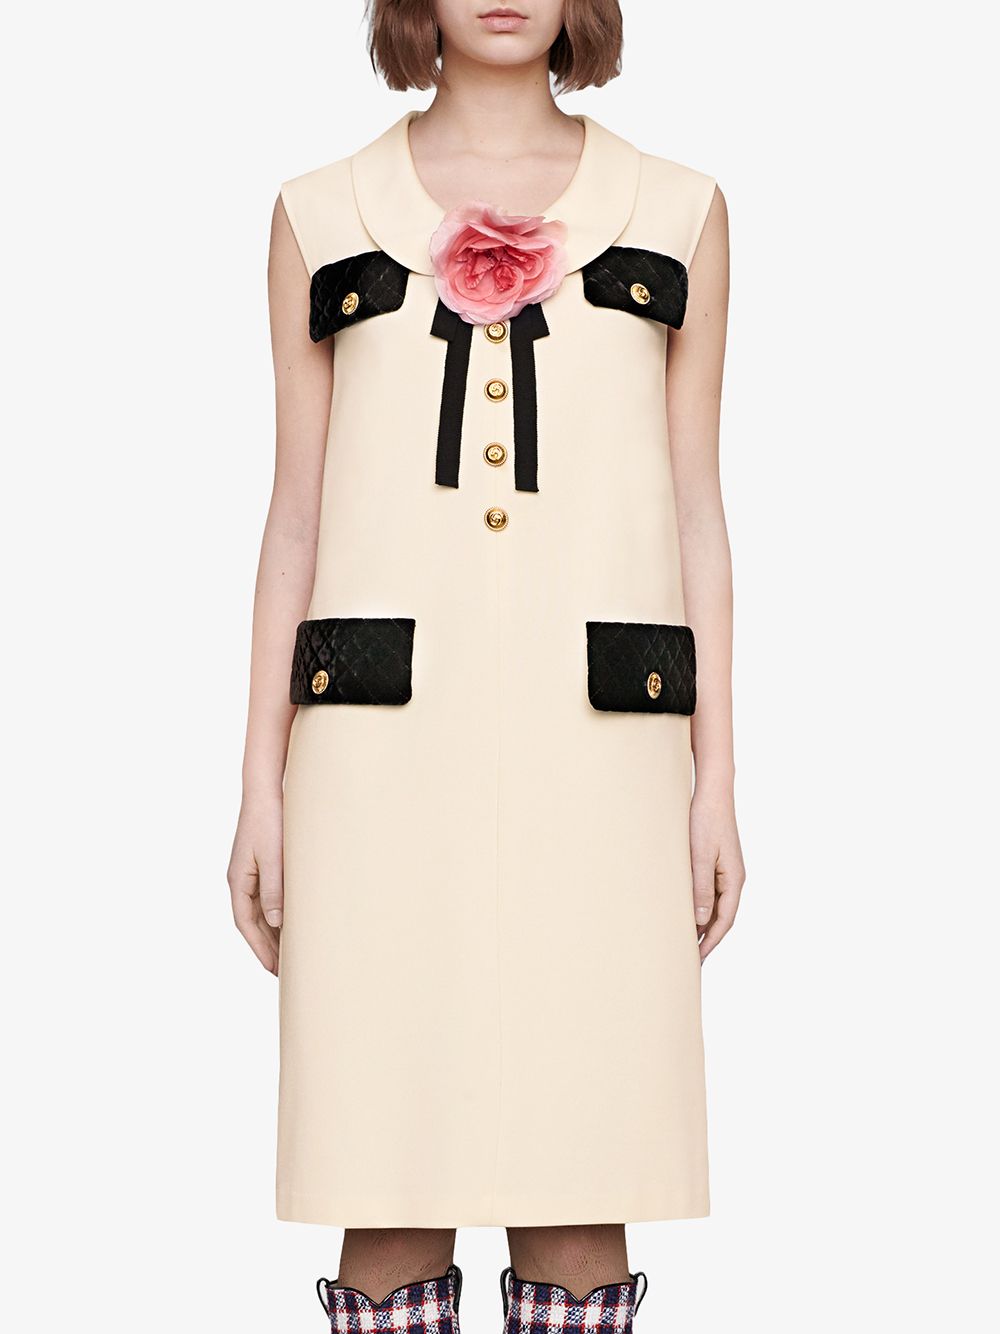 $1450 NEW Authentic Gucci Dress w/Flower Brooch,sz XL, Red